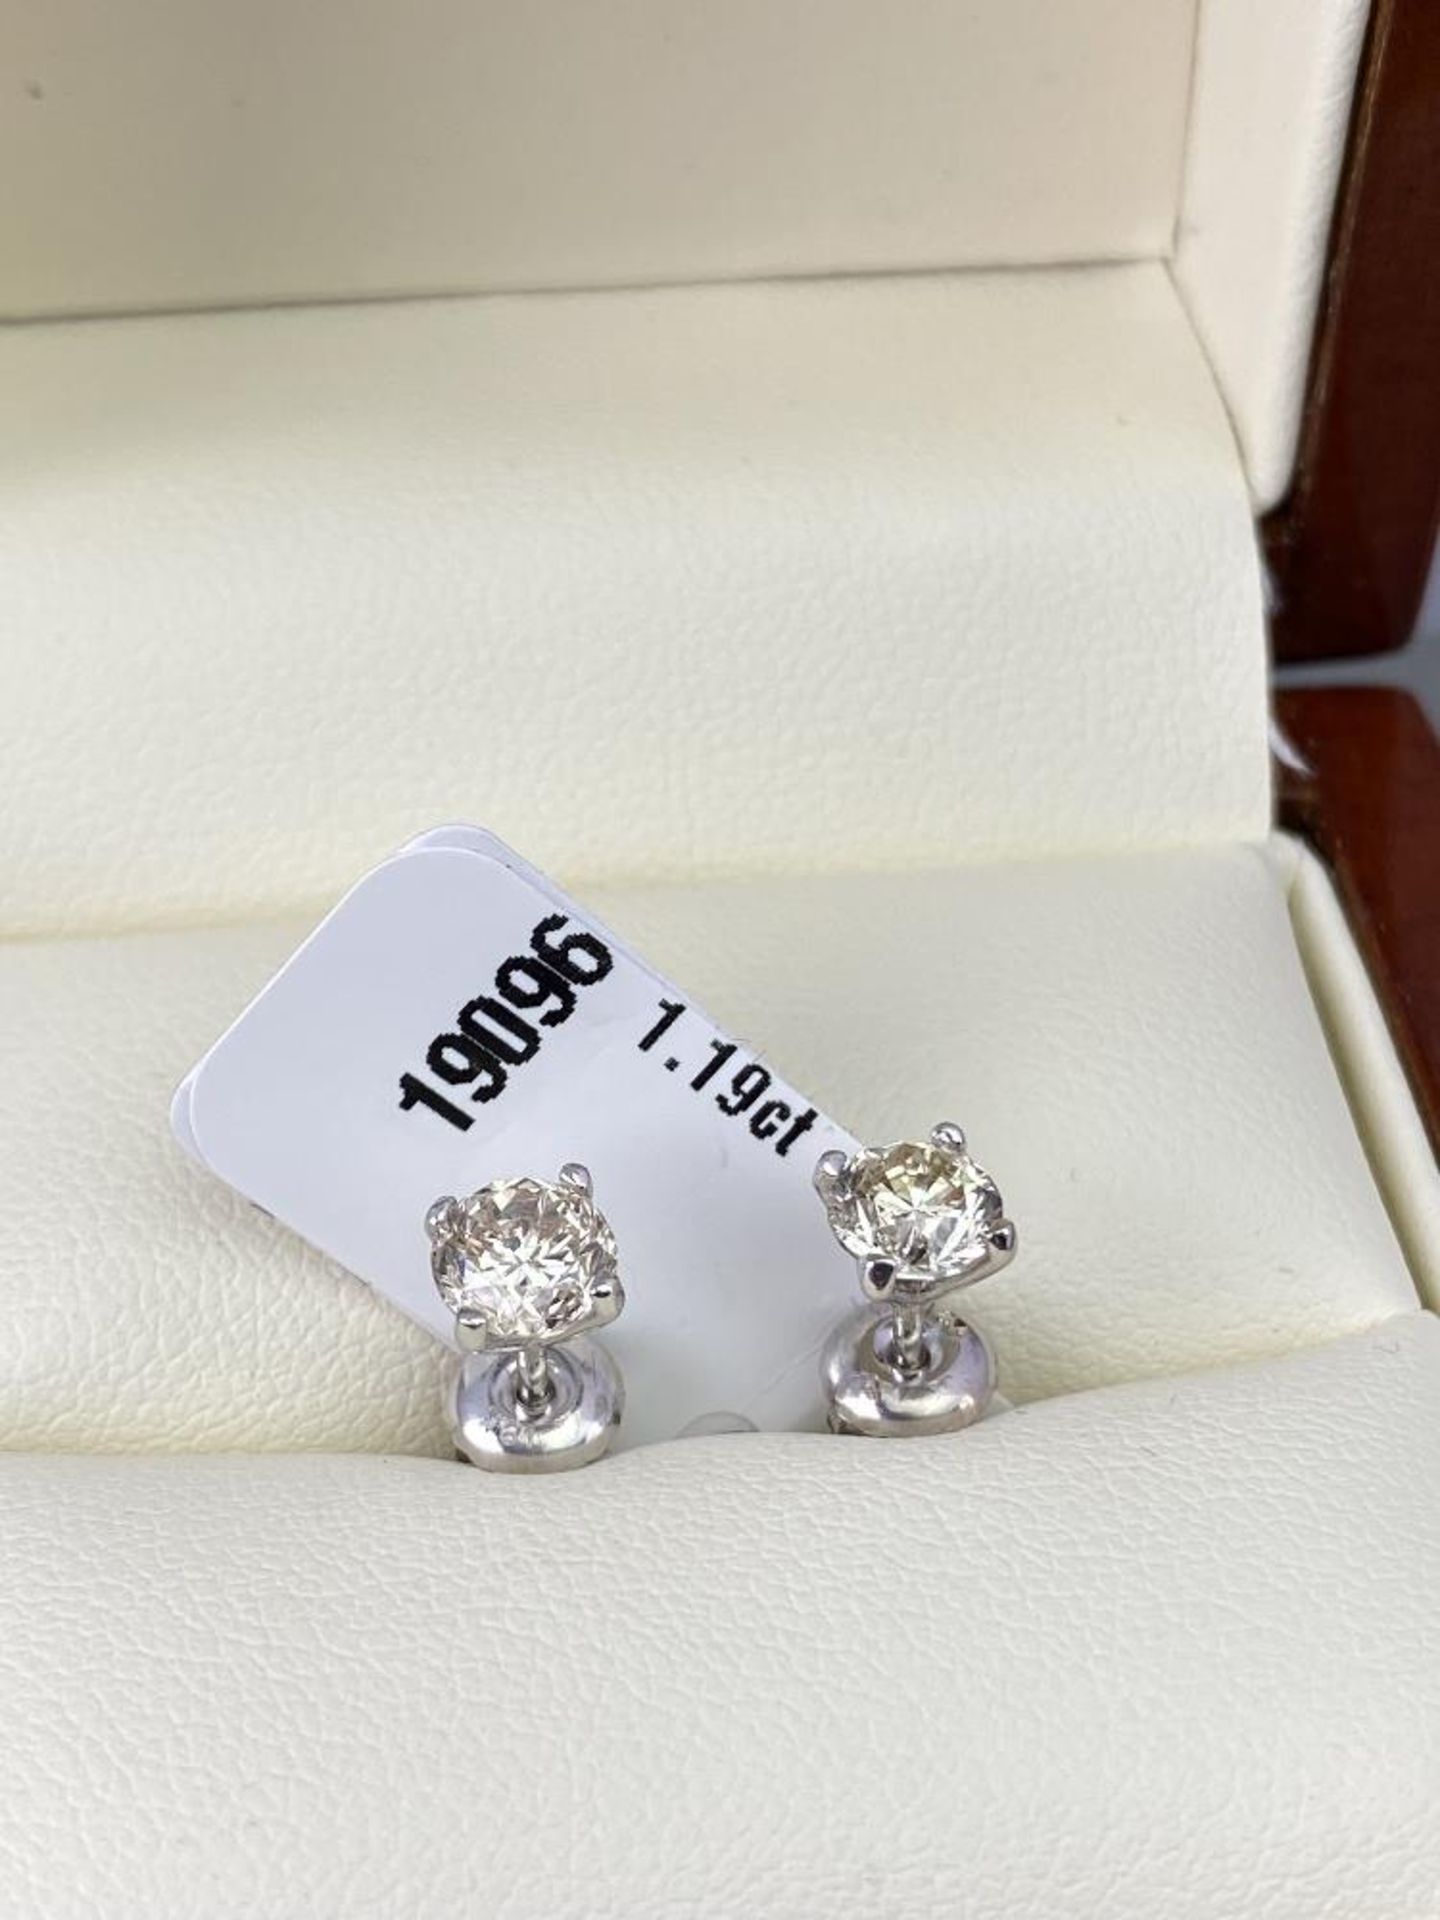 Pair of New 1.19 Carat Round Cut VVS2/D Diamond Earrings - Image 7 of 8